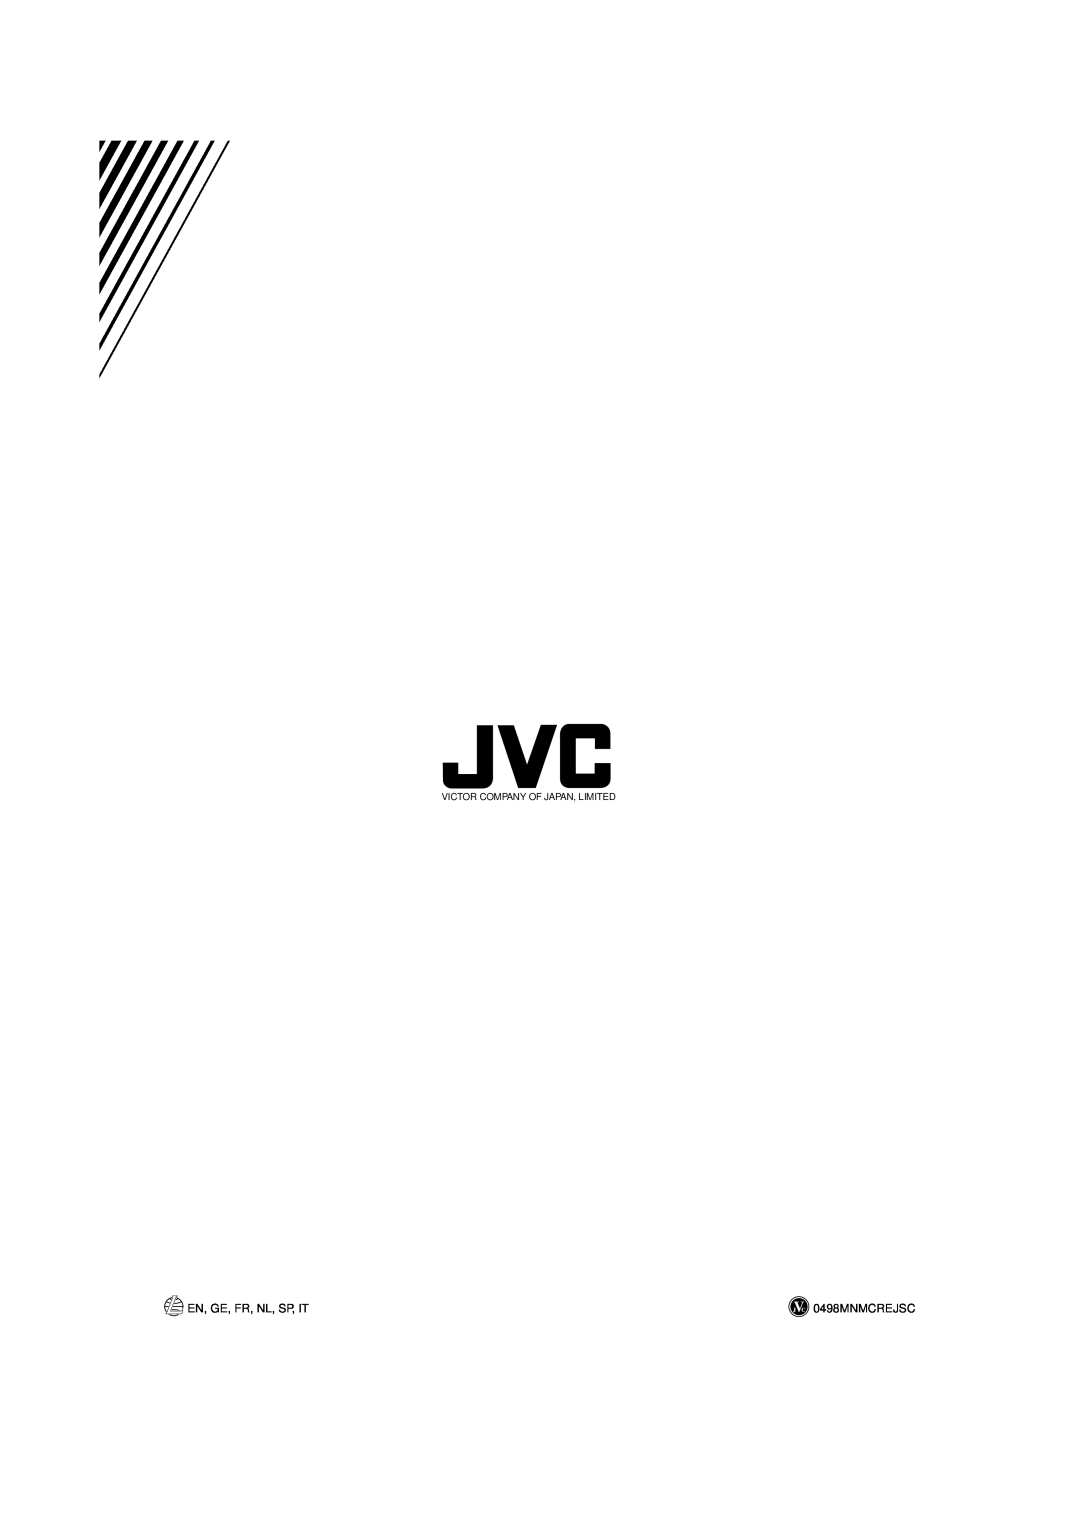 JVC LVT0084-001A manual En, Ge, Fr, Nl, Sp, It, 0498MNMCREJSC, Victor Company Of Japan, Limited 